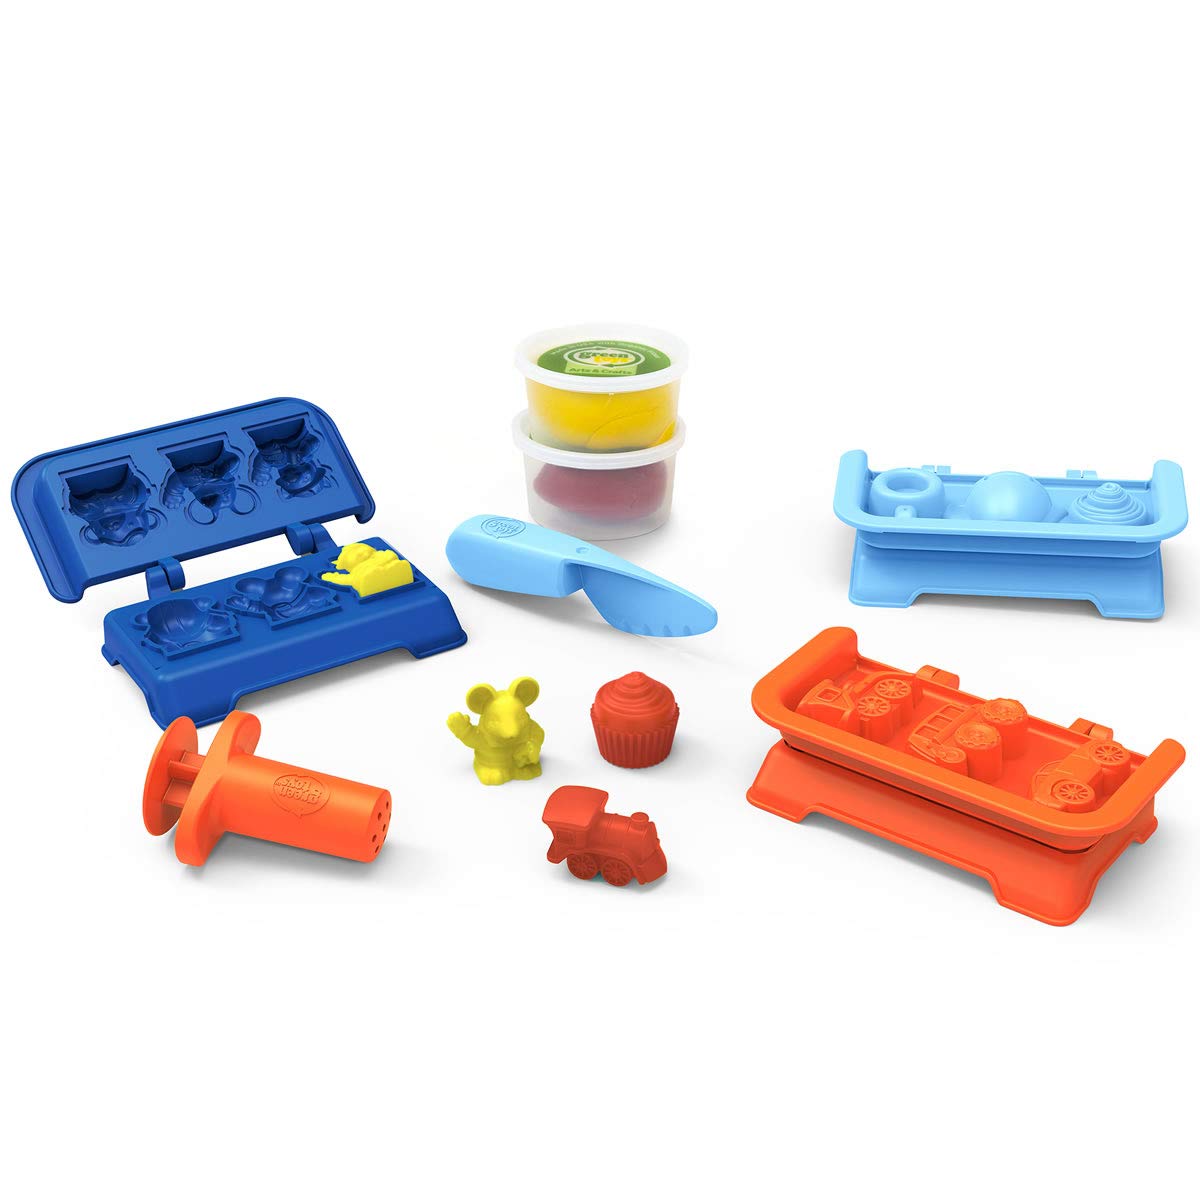 Green Toys DTM1-1301 Set Spielzeug Knete, bunt